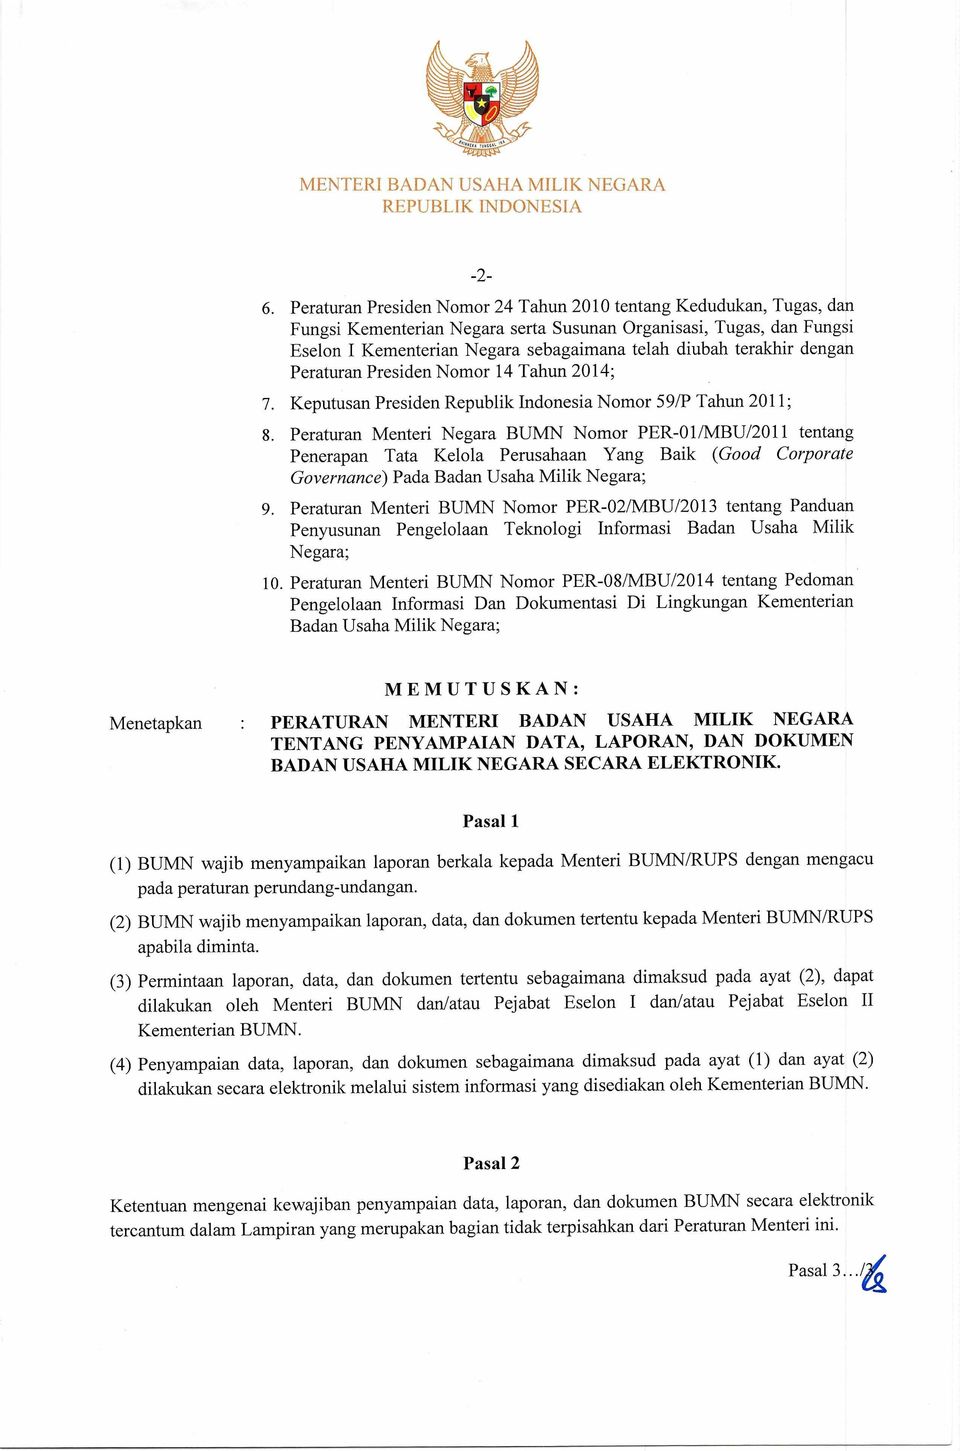 Peraturan Menteri Negara BUMN Nomor PER-01/MBU/2011 tentang Penerapan Tata Kelola Perusahaan Yang Baik (Good Corporate Governance) Pada Badan Usaha Milik Negara; 9.